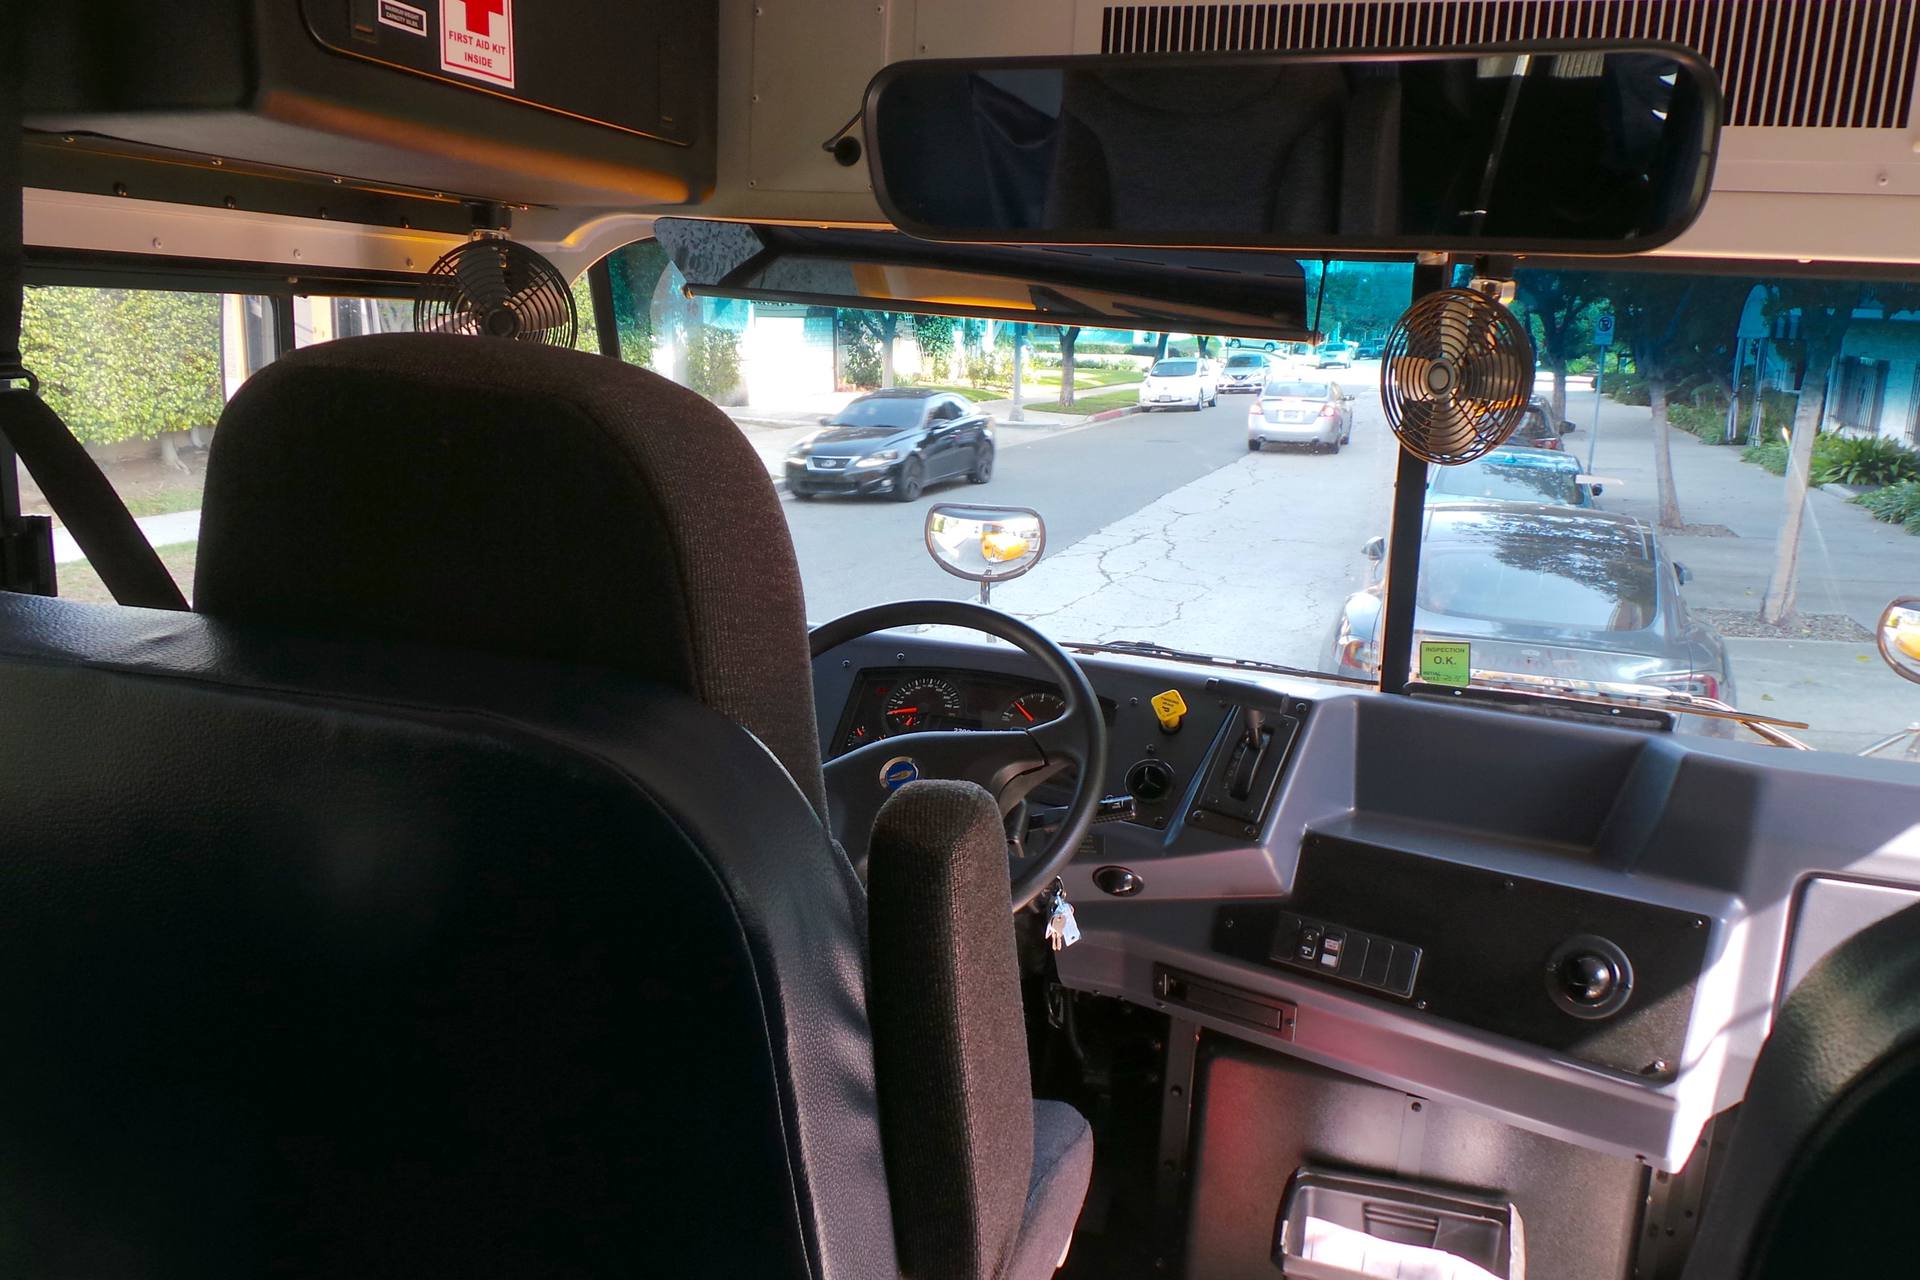 fairfax county school bus driver shortage